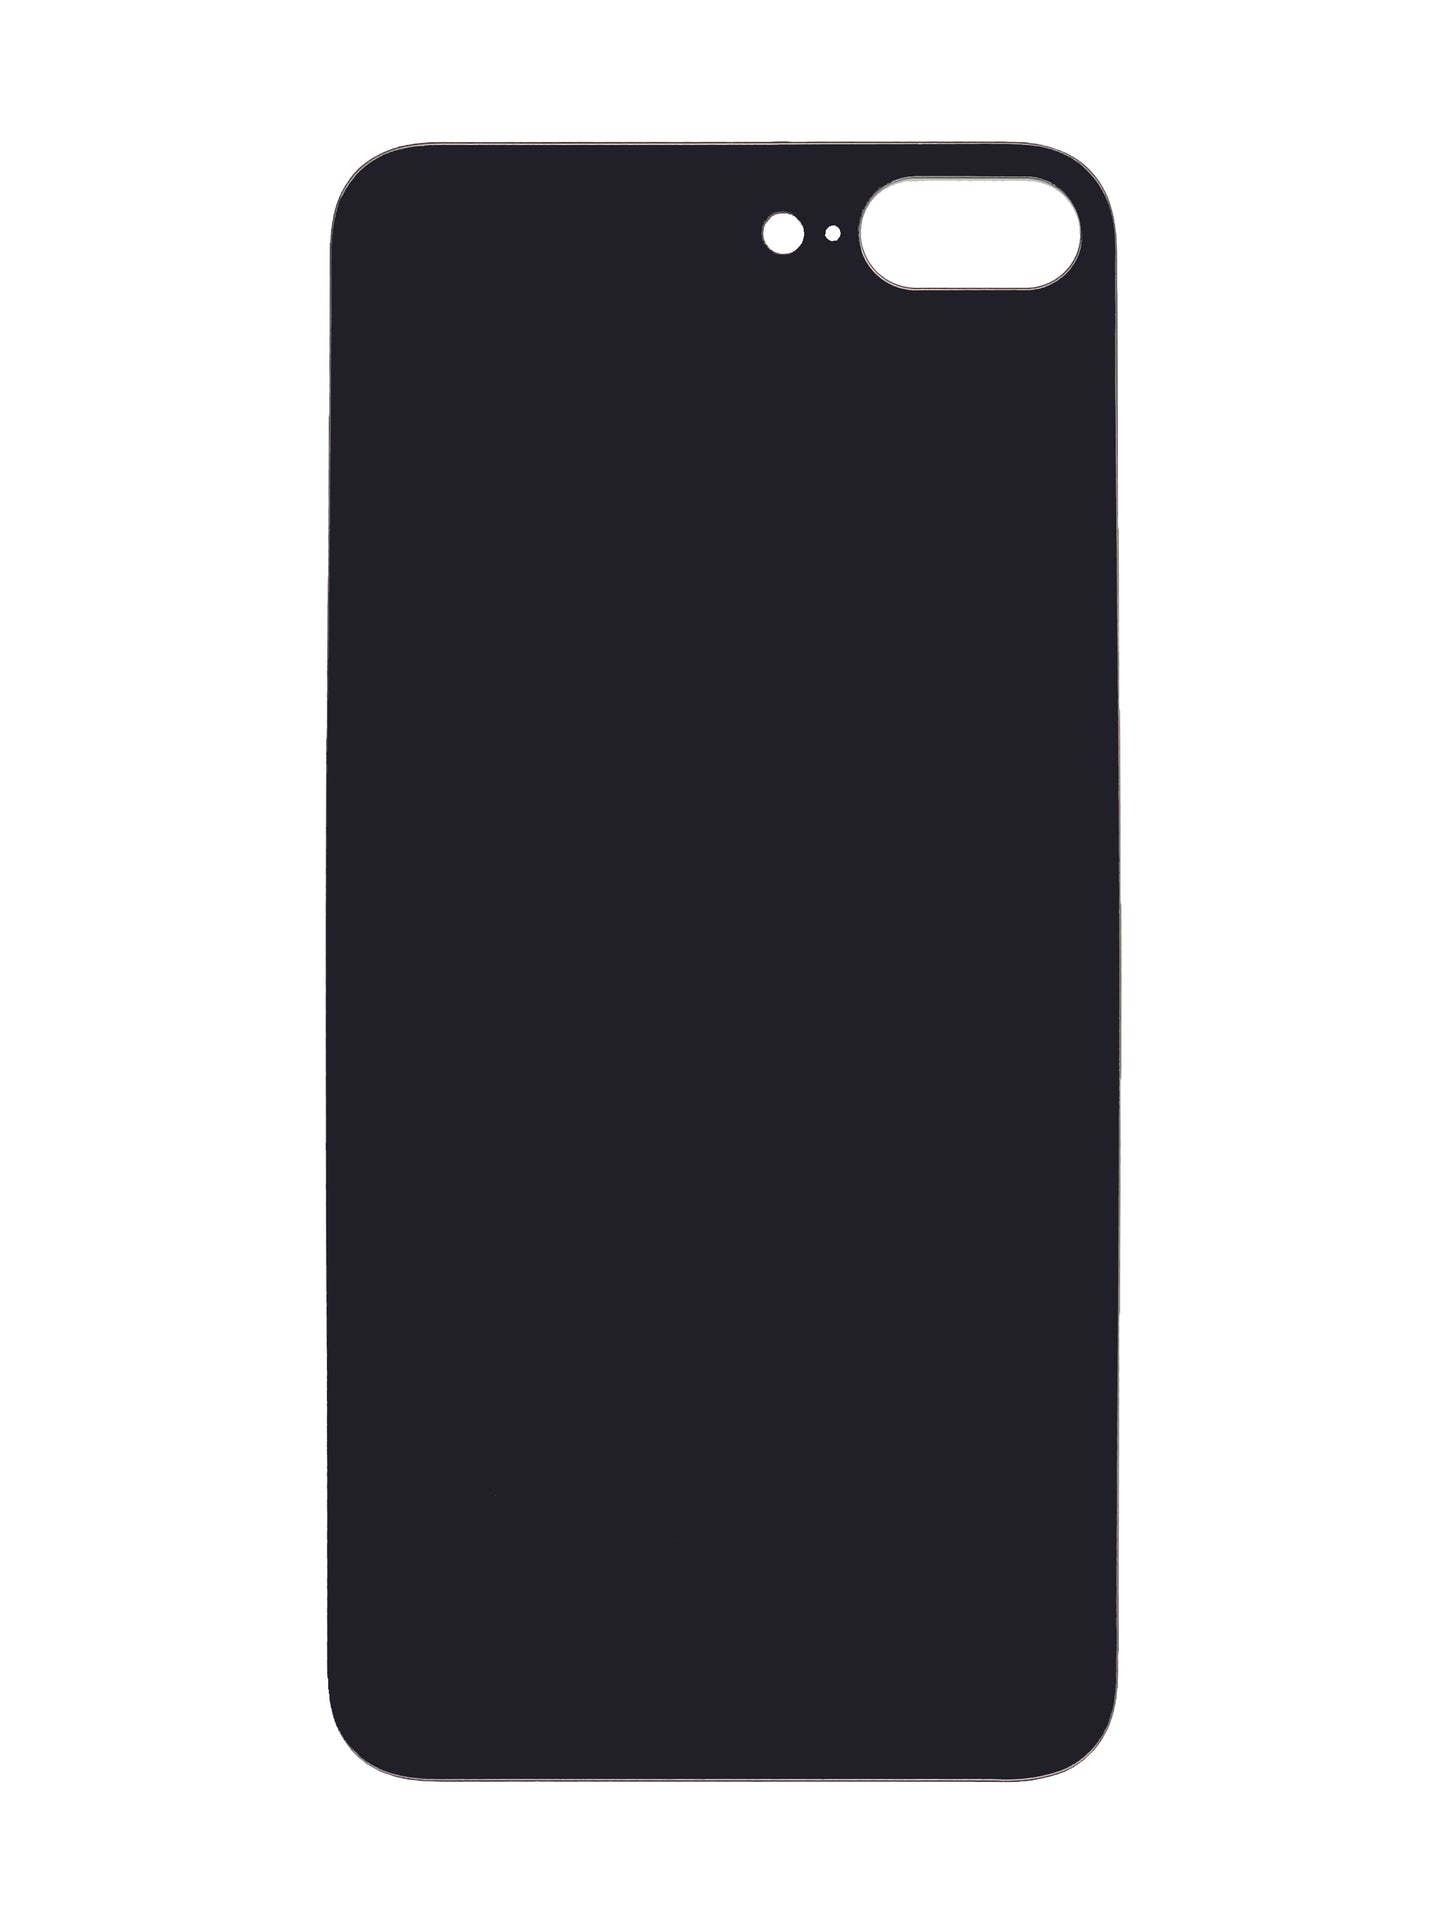 iPhone 8 Plus Back Glass (No Logo) (Black)